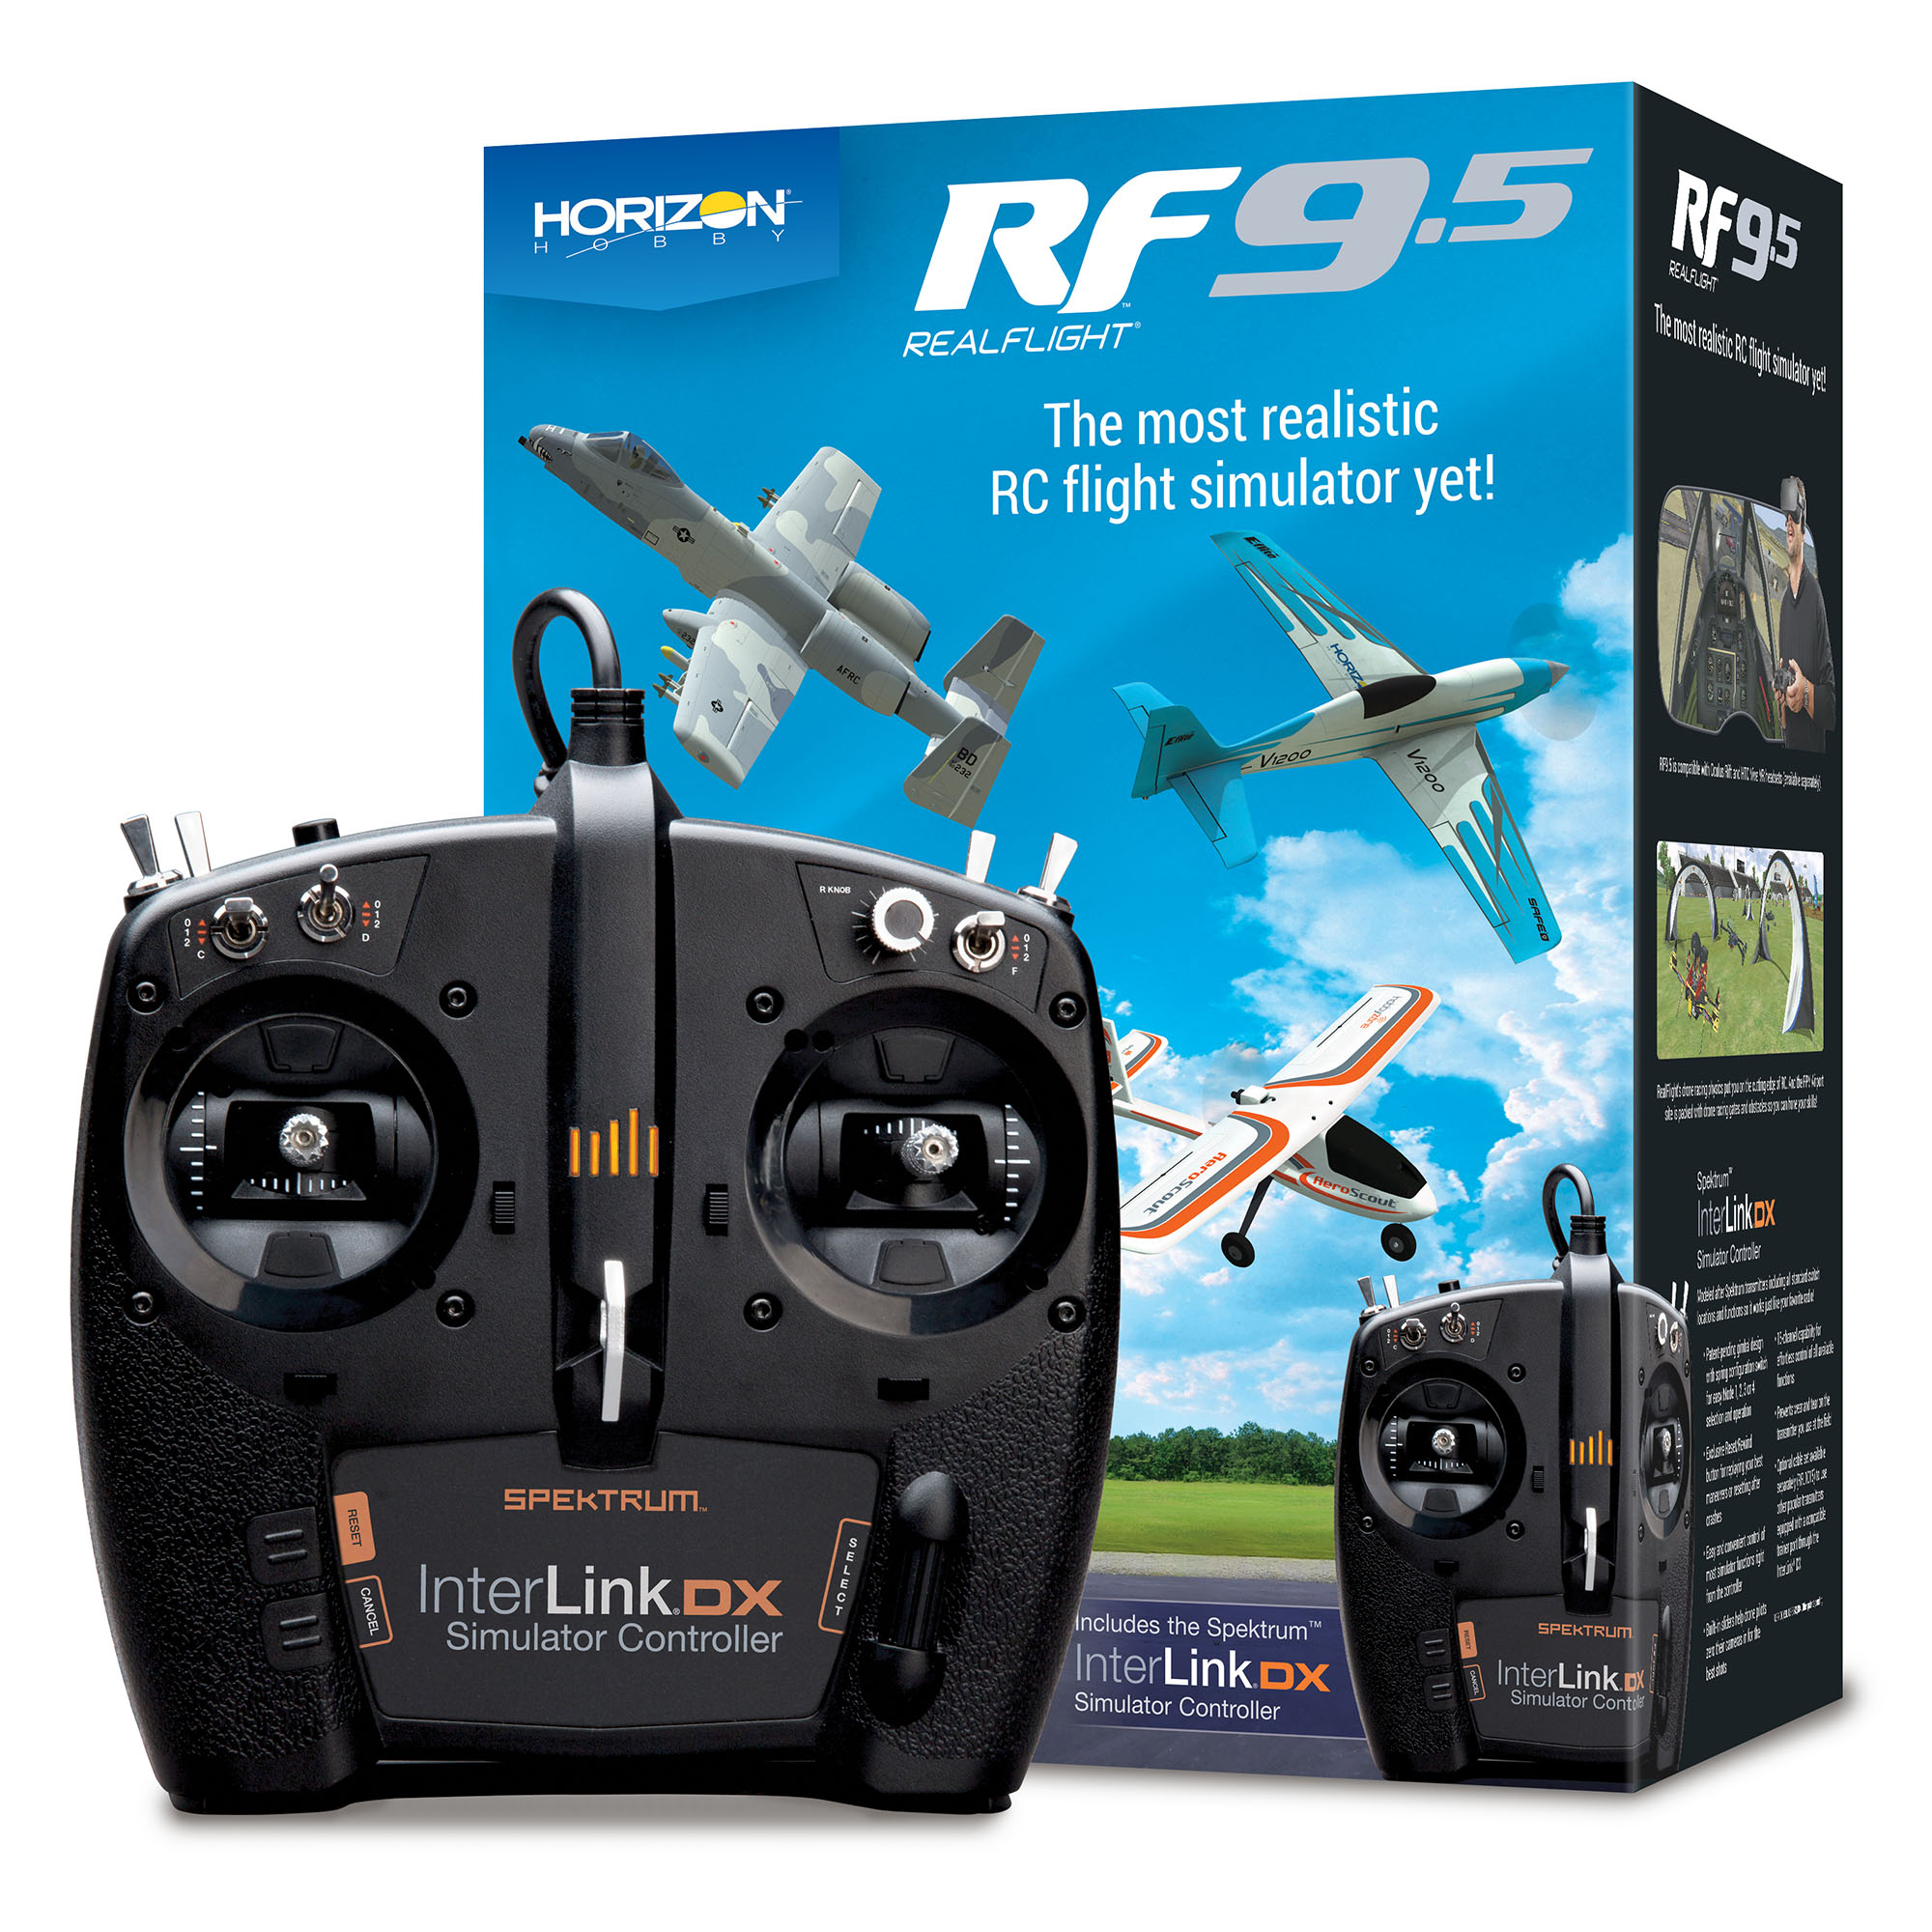 realflight 7.5 rc flight simulator iso